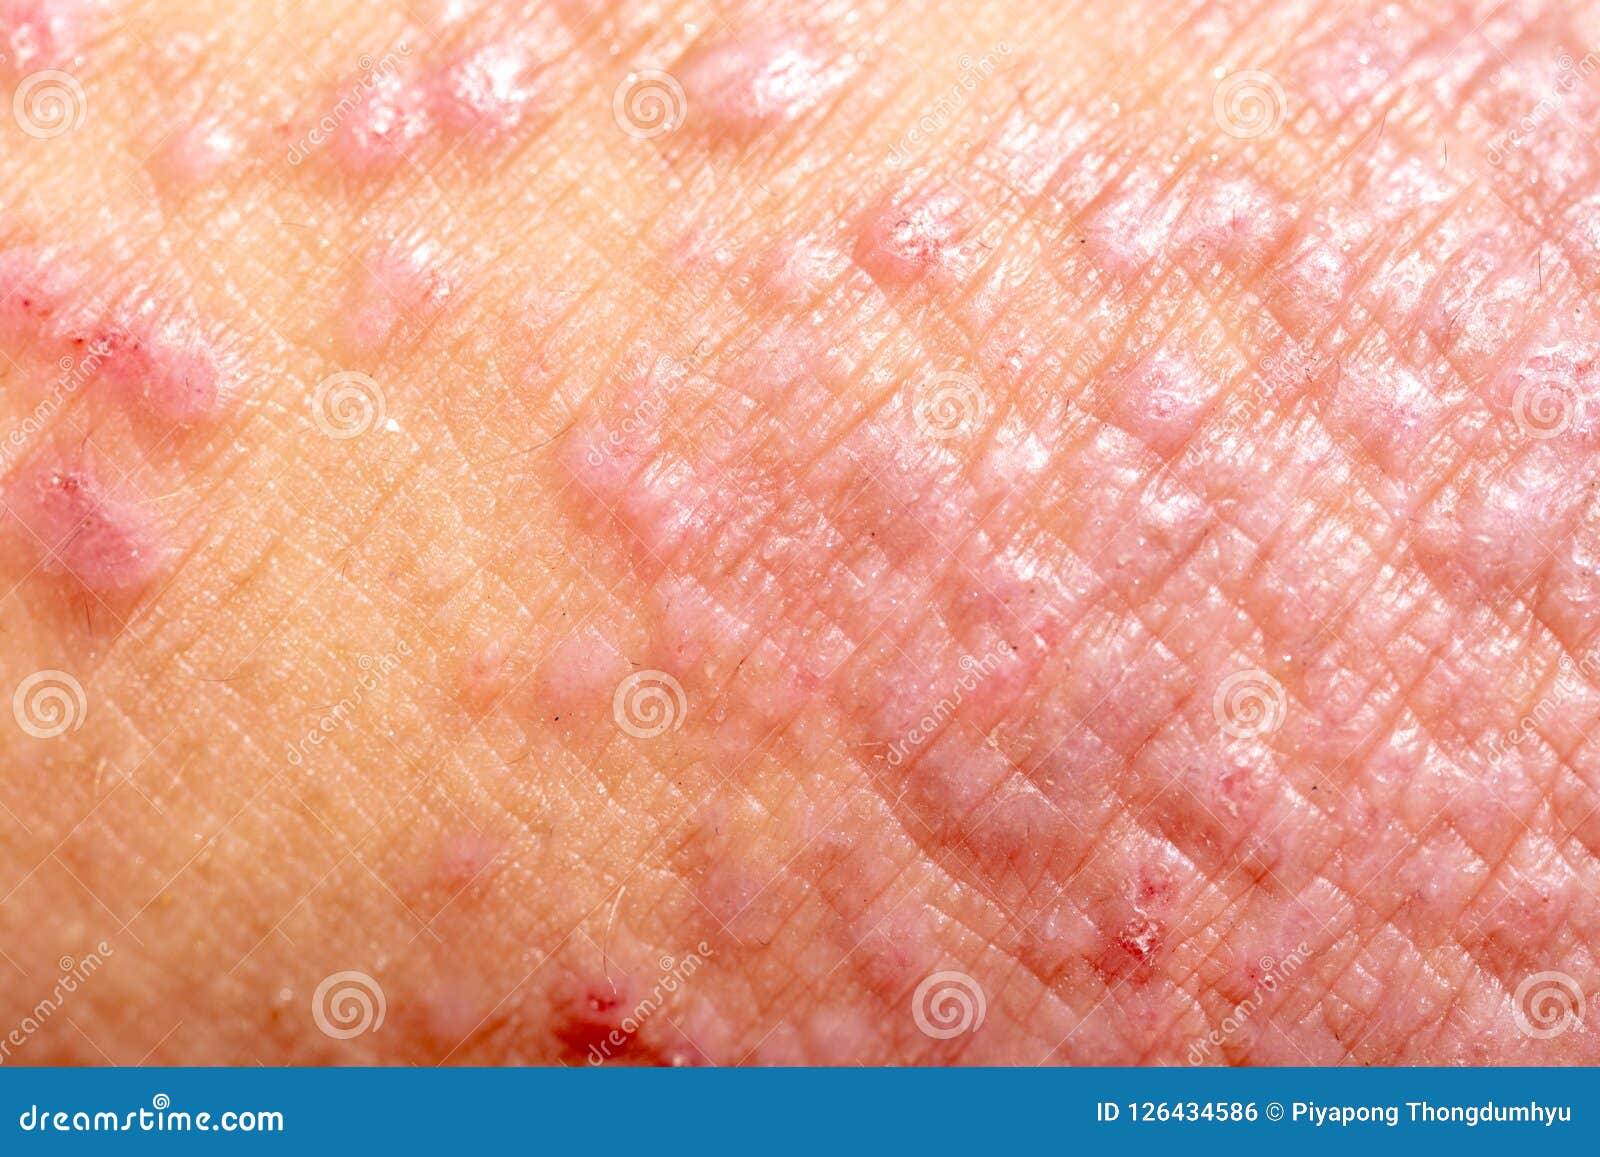 Dermatitis from varicose photo